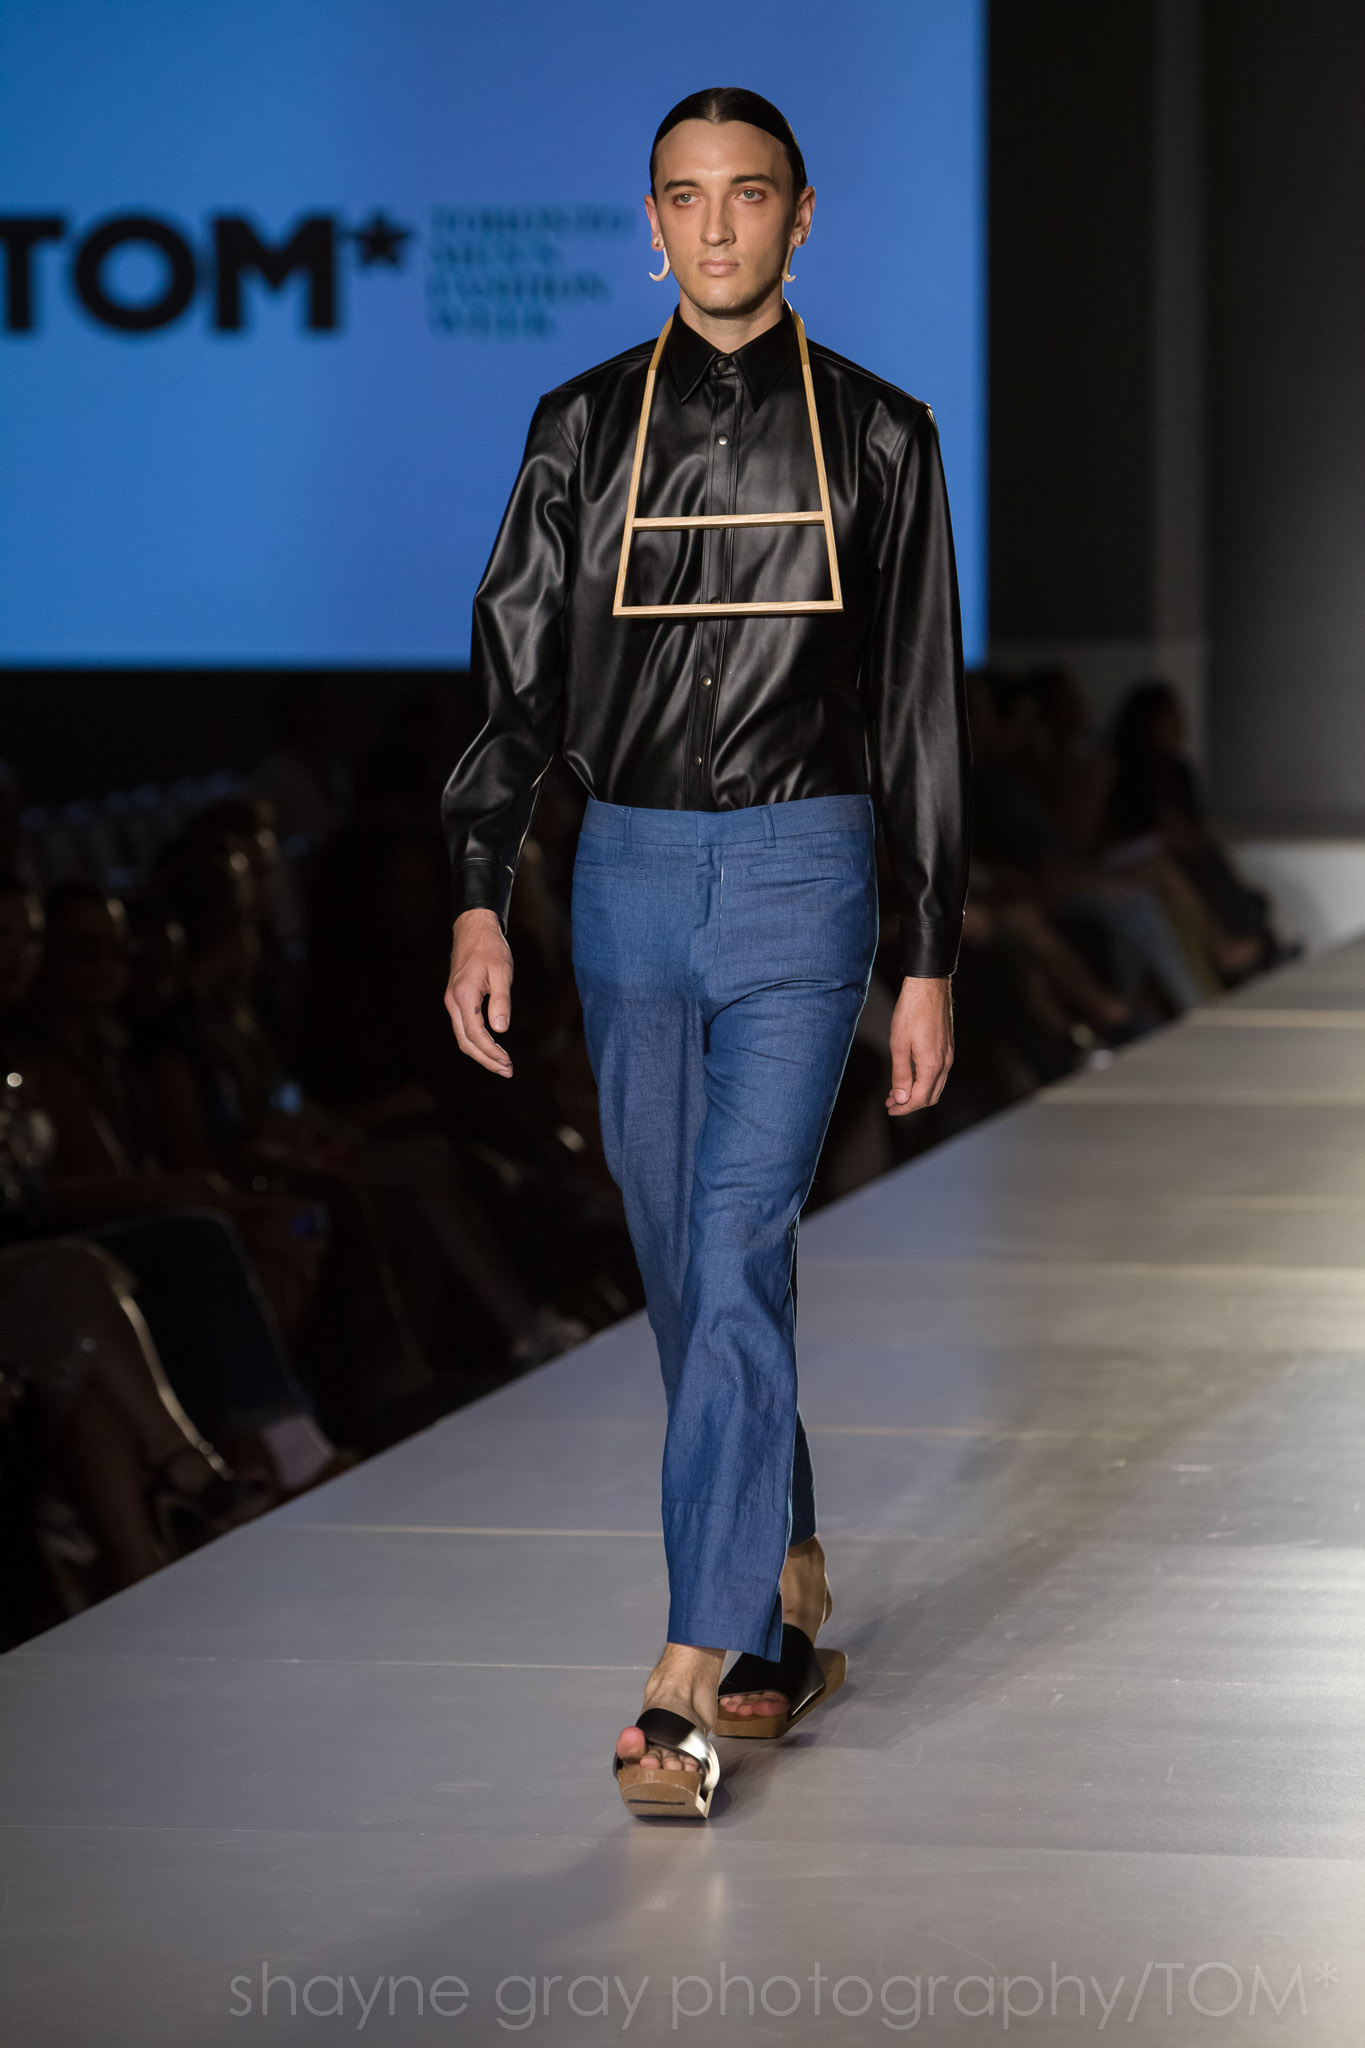 Shayne-Gray-Toronto-men's-fashion_week-TOM-wrkdept-8663.jpg